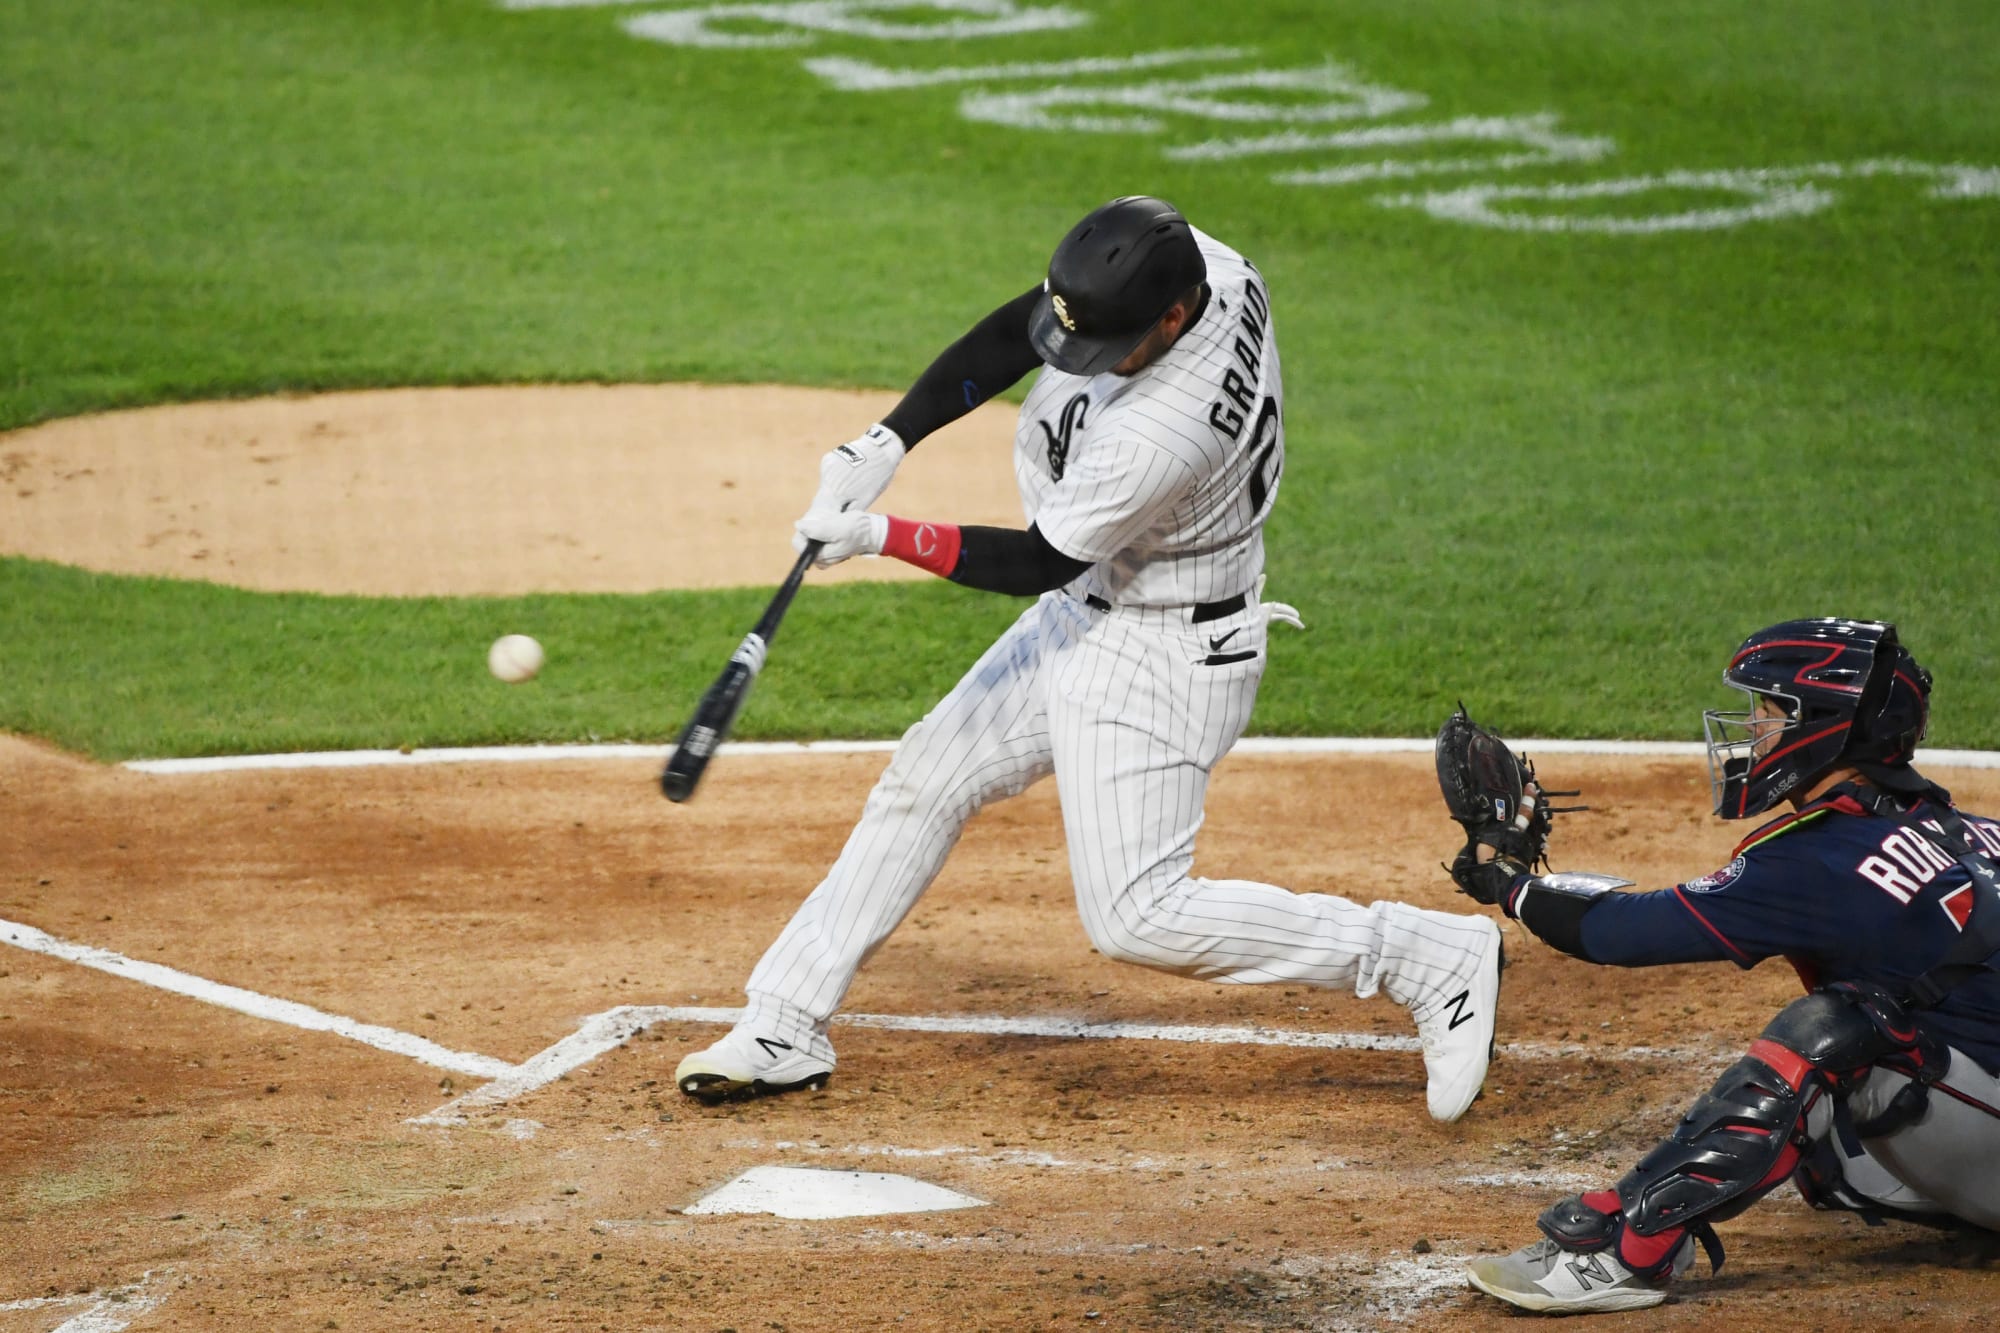 Chicago White Sox: Yasmani Grandal's impressive May batting line